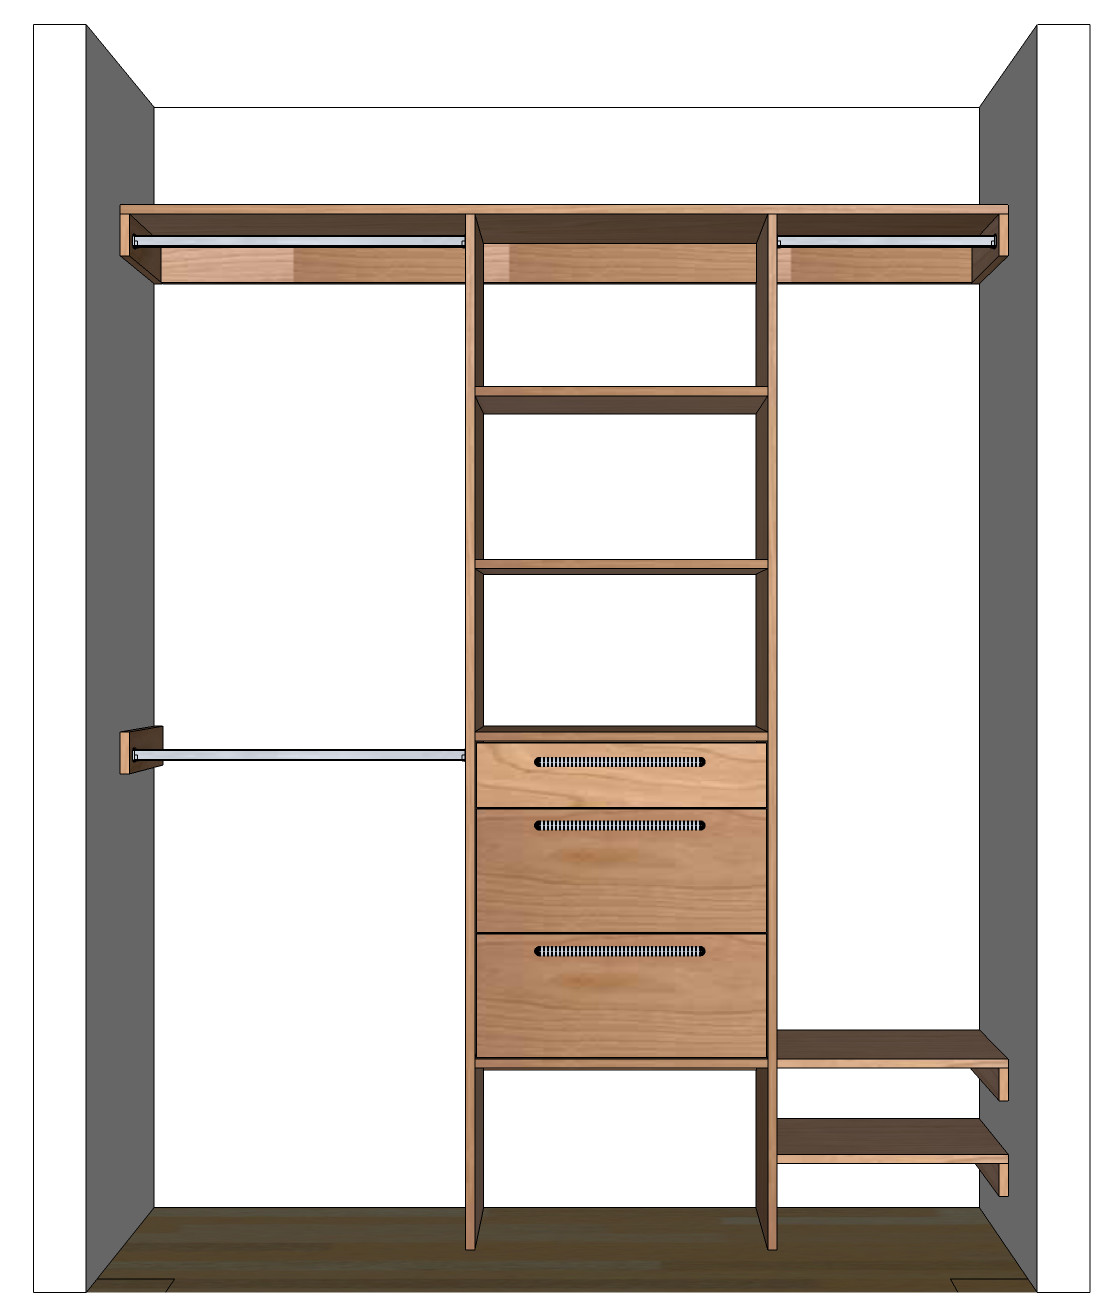 Best ideas about DIY Closet Organizer Plans
. Save or Pin DIY Closet Organizer Plans For 5 to 8 Closet Now.